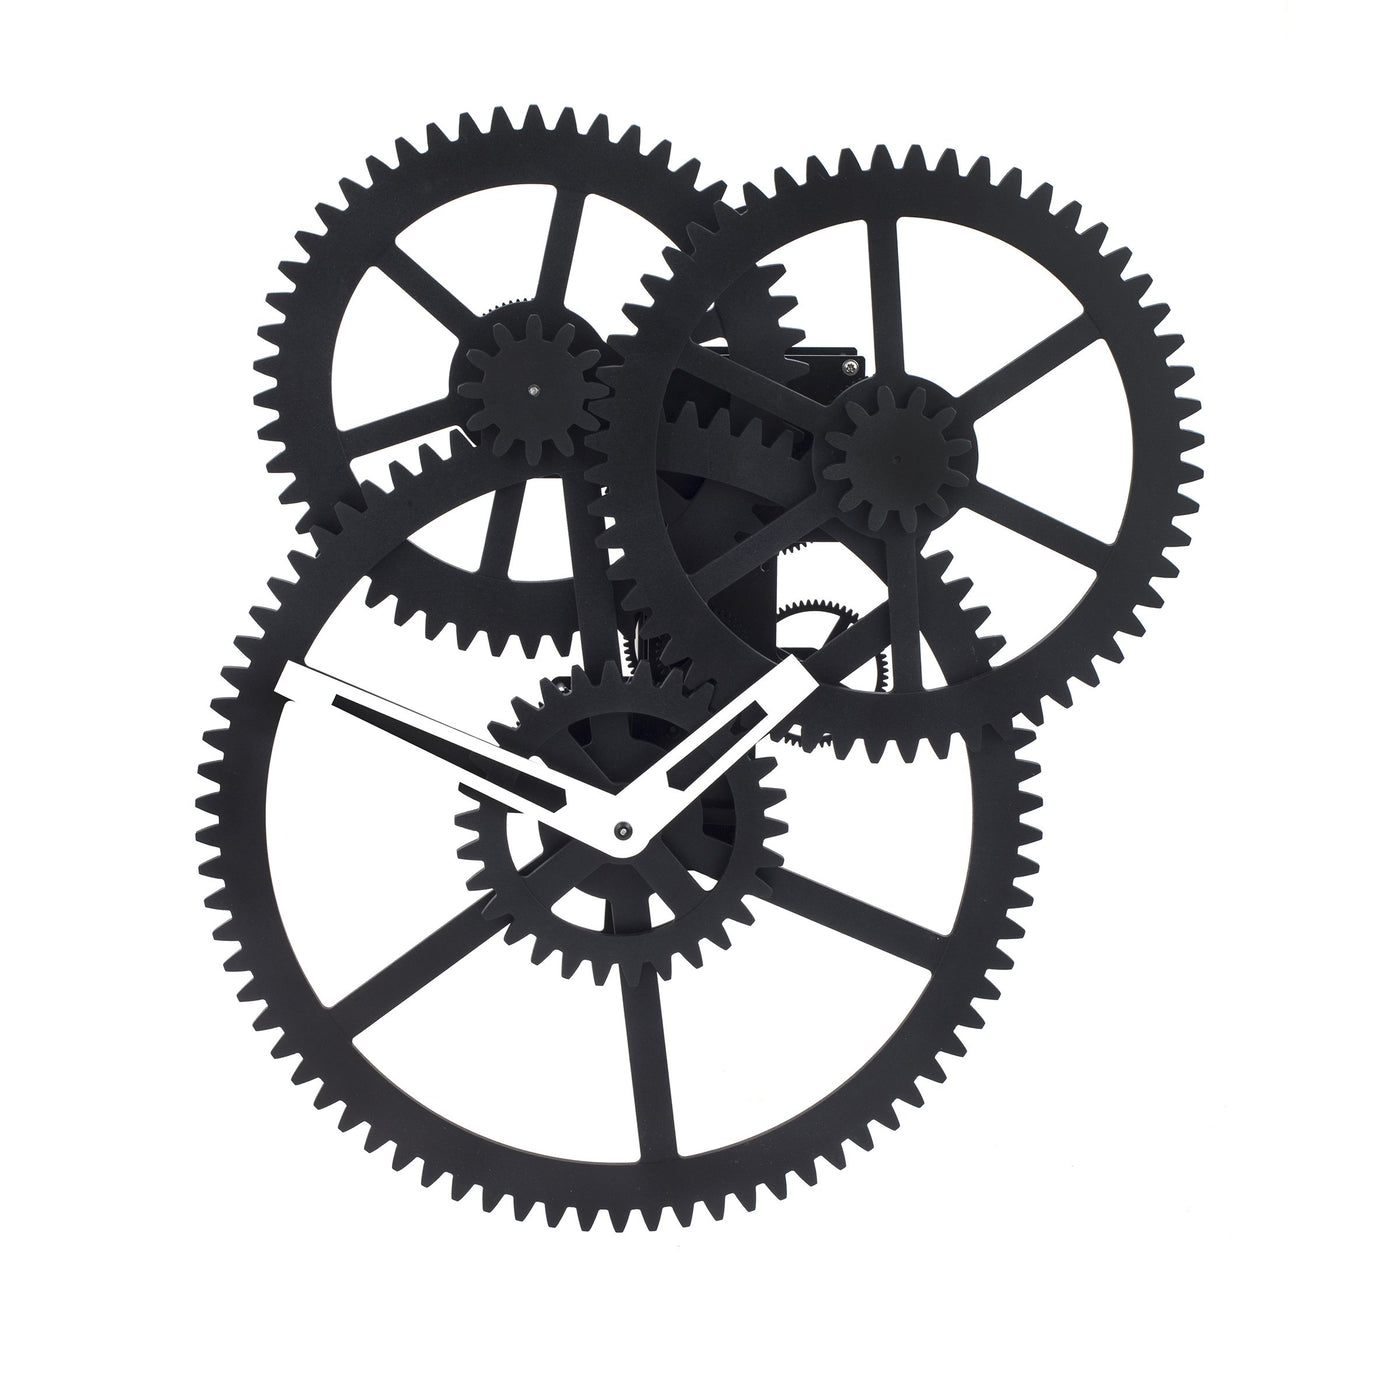 Triple Gear Wall Clock - Black clock